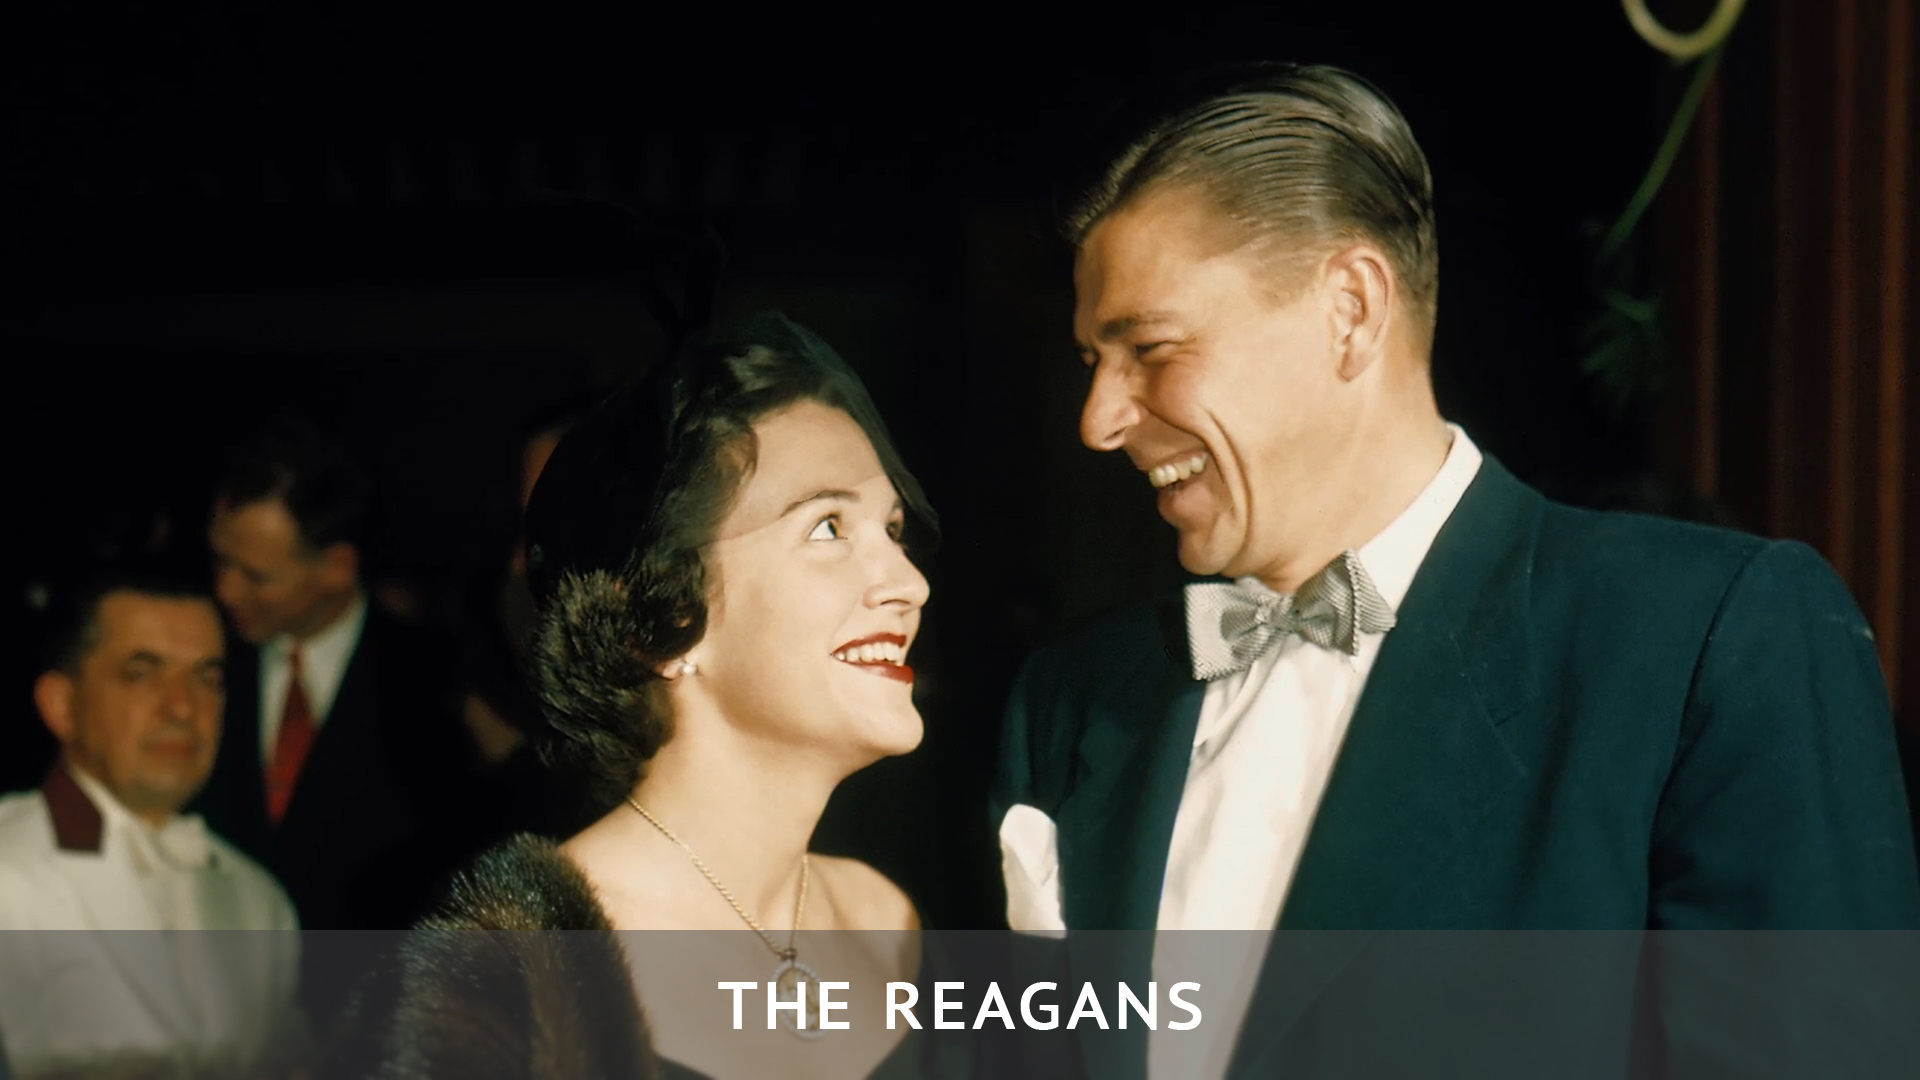 The Reagans / Showtime - Color Grading / Color Correction / Post Production